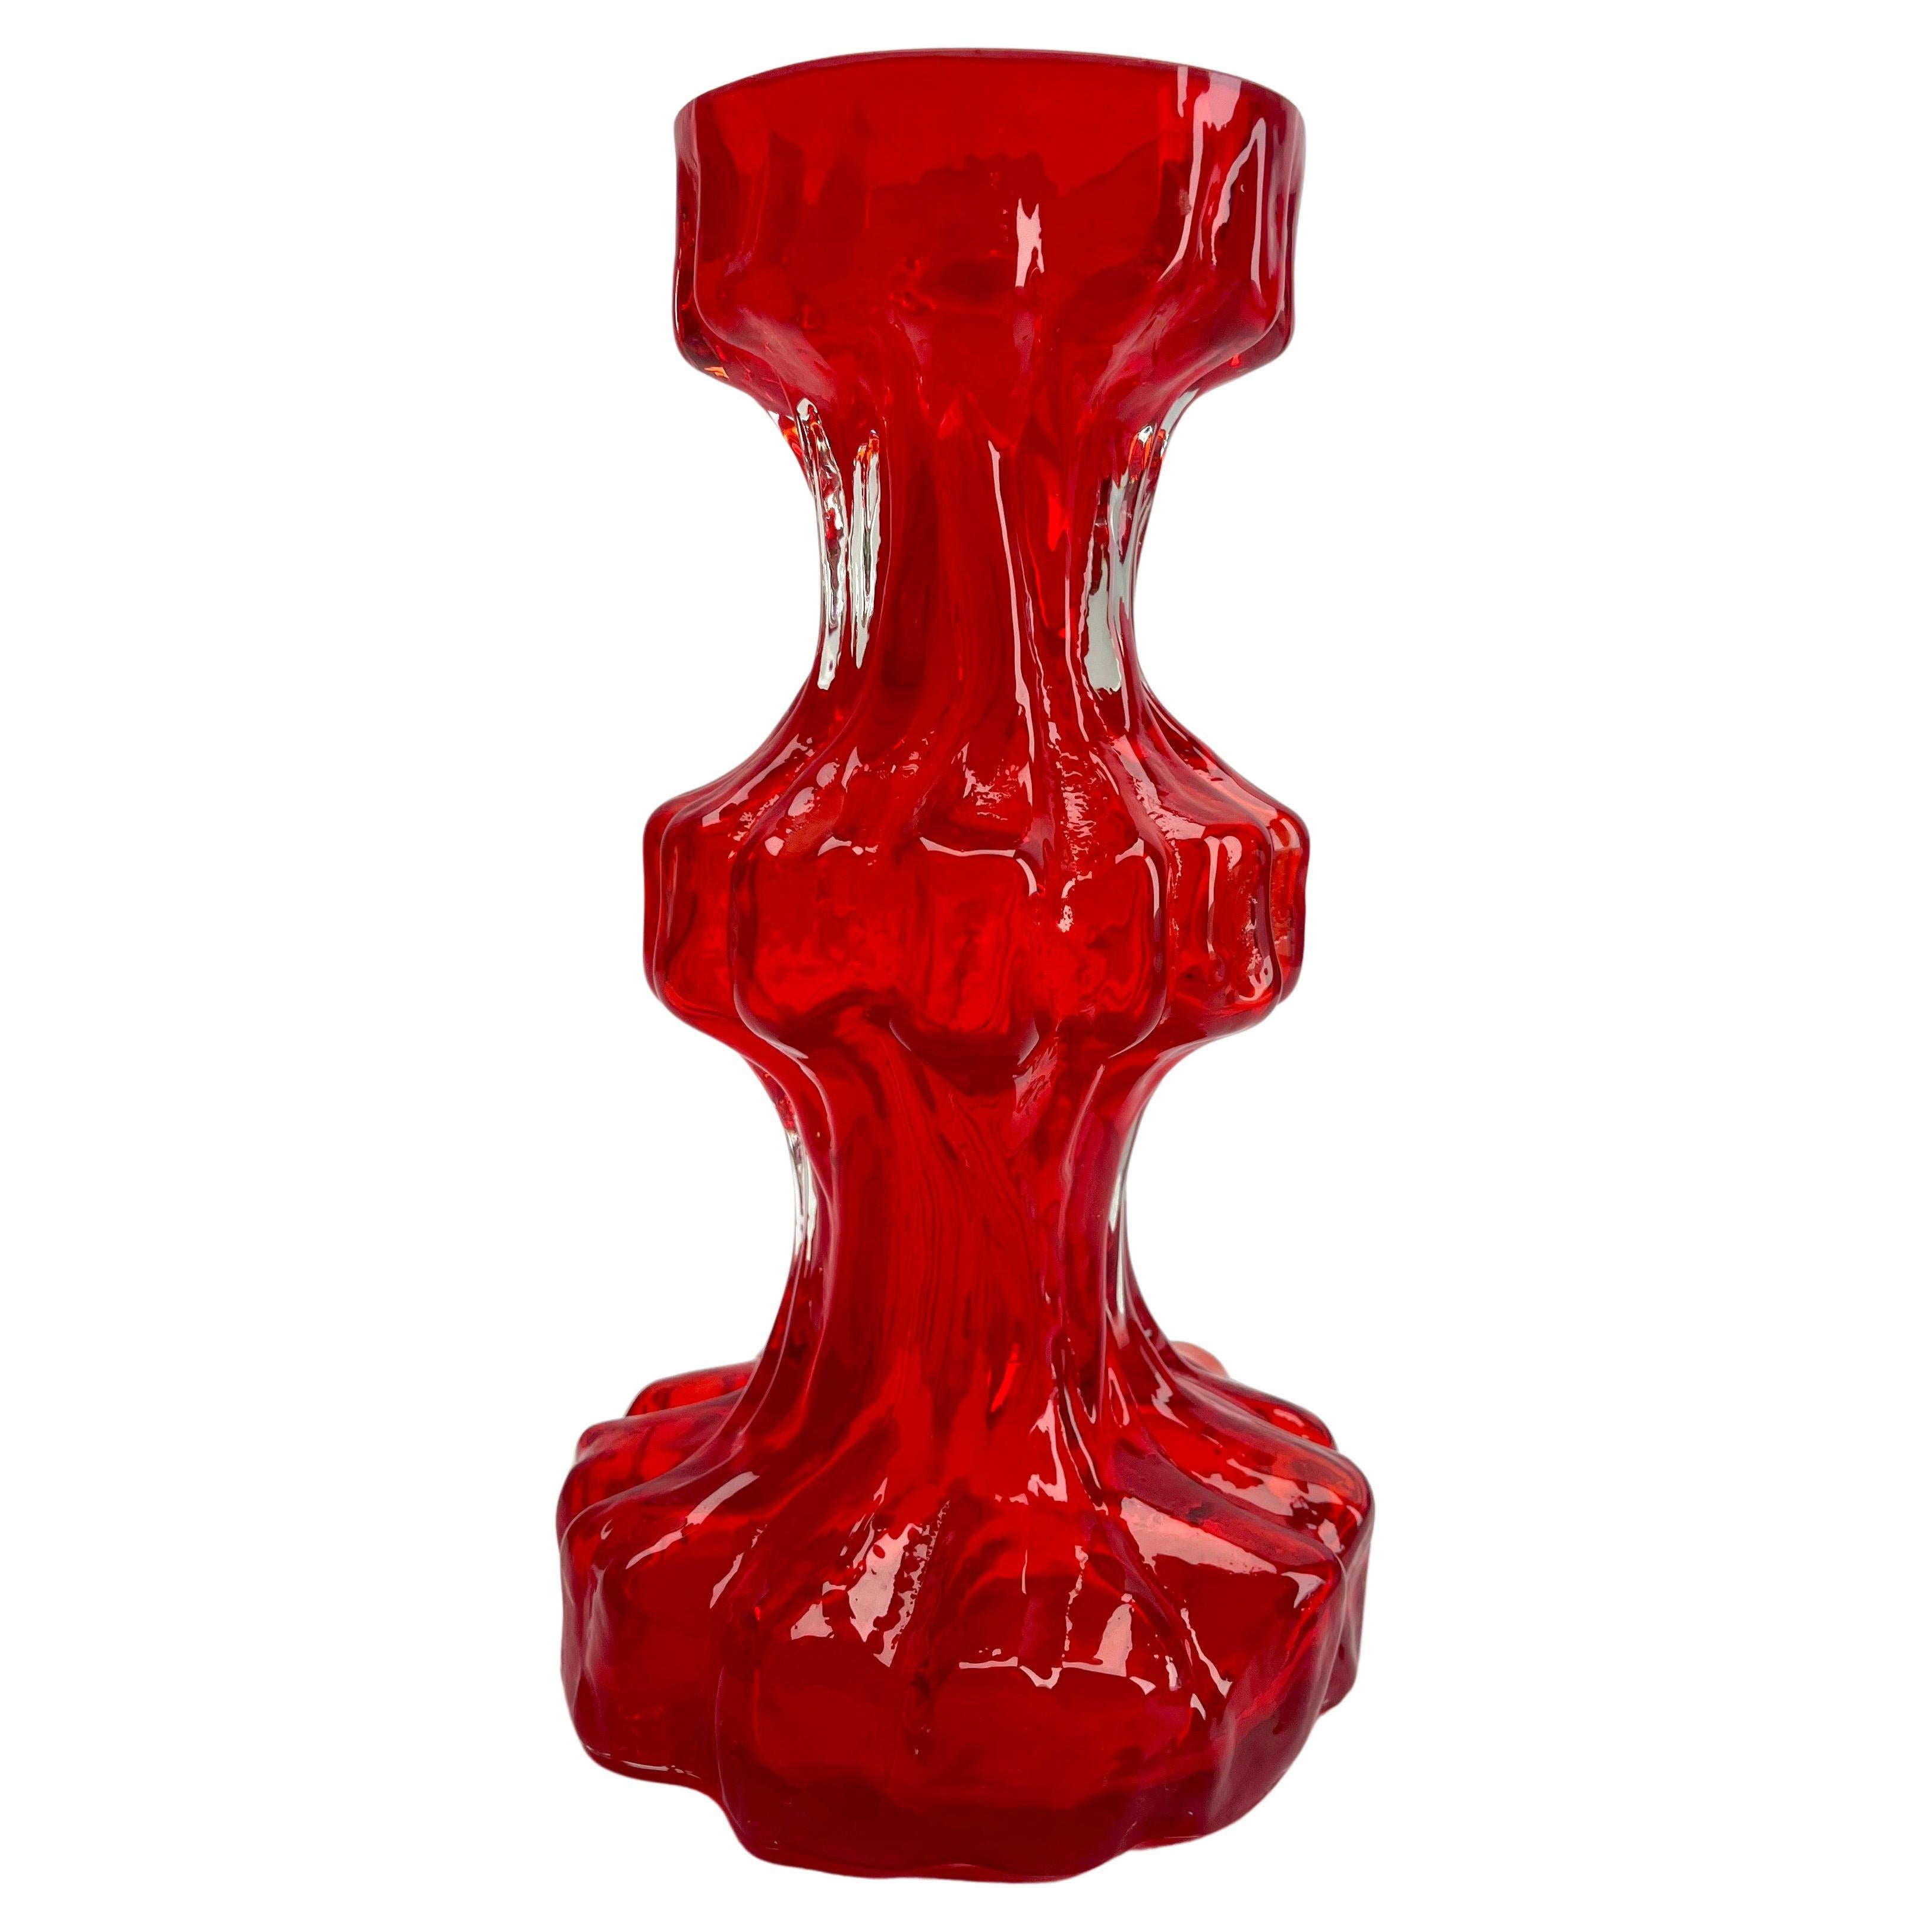 Ingrid Glas ‘Germany’ Bark Vase in Red, 1970s For Sale